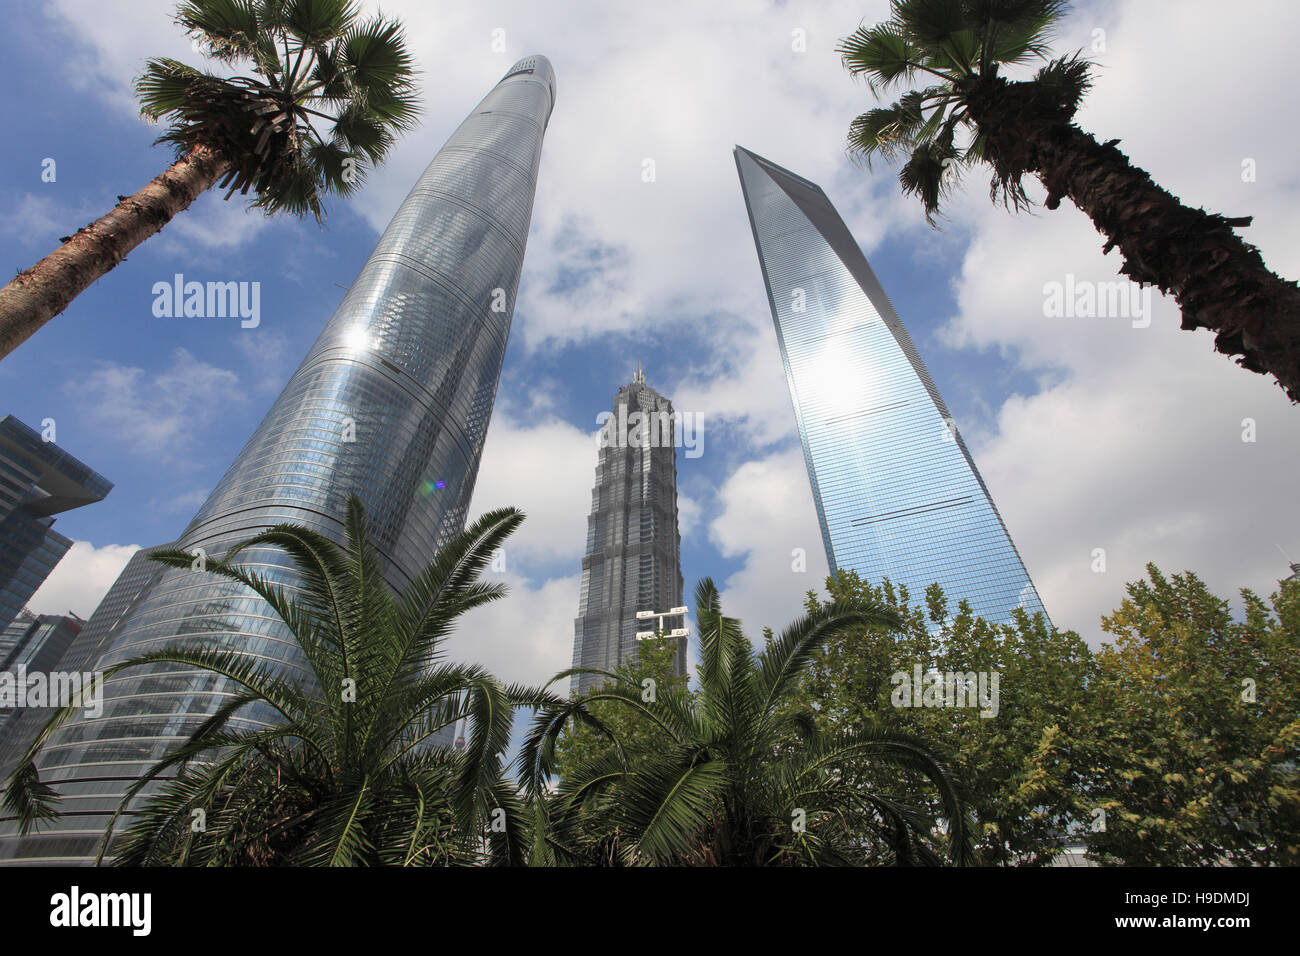 China, Shanghai, Pudong, Shanghai Tower, Jinmao Tower, Shanghai World Financial Center, Stock Photo